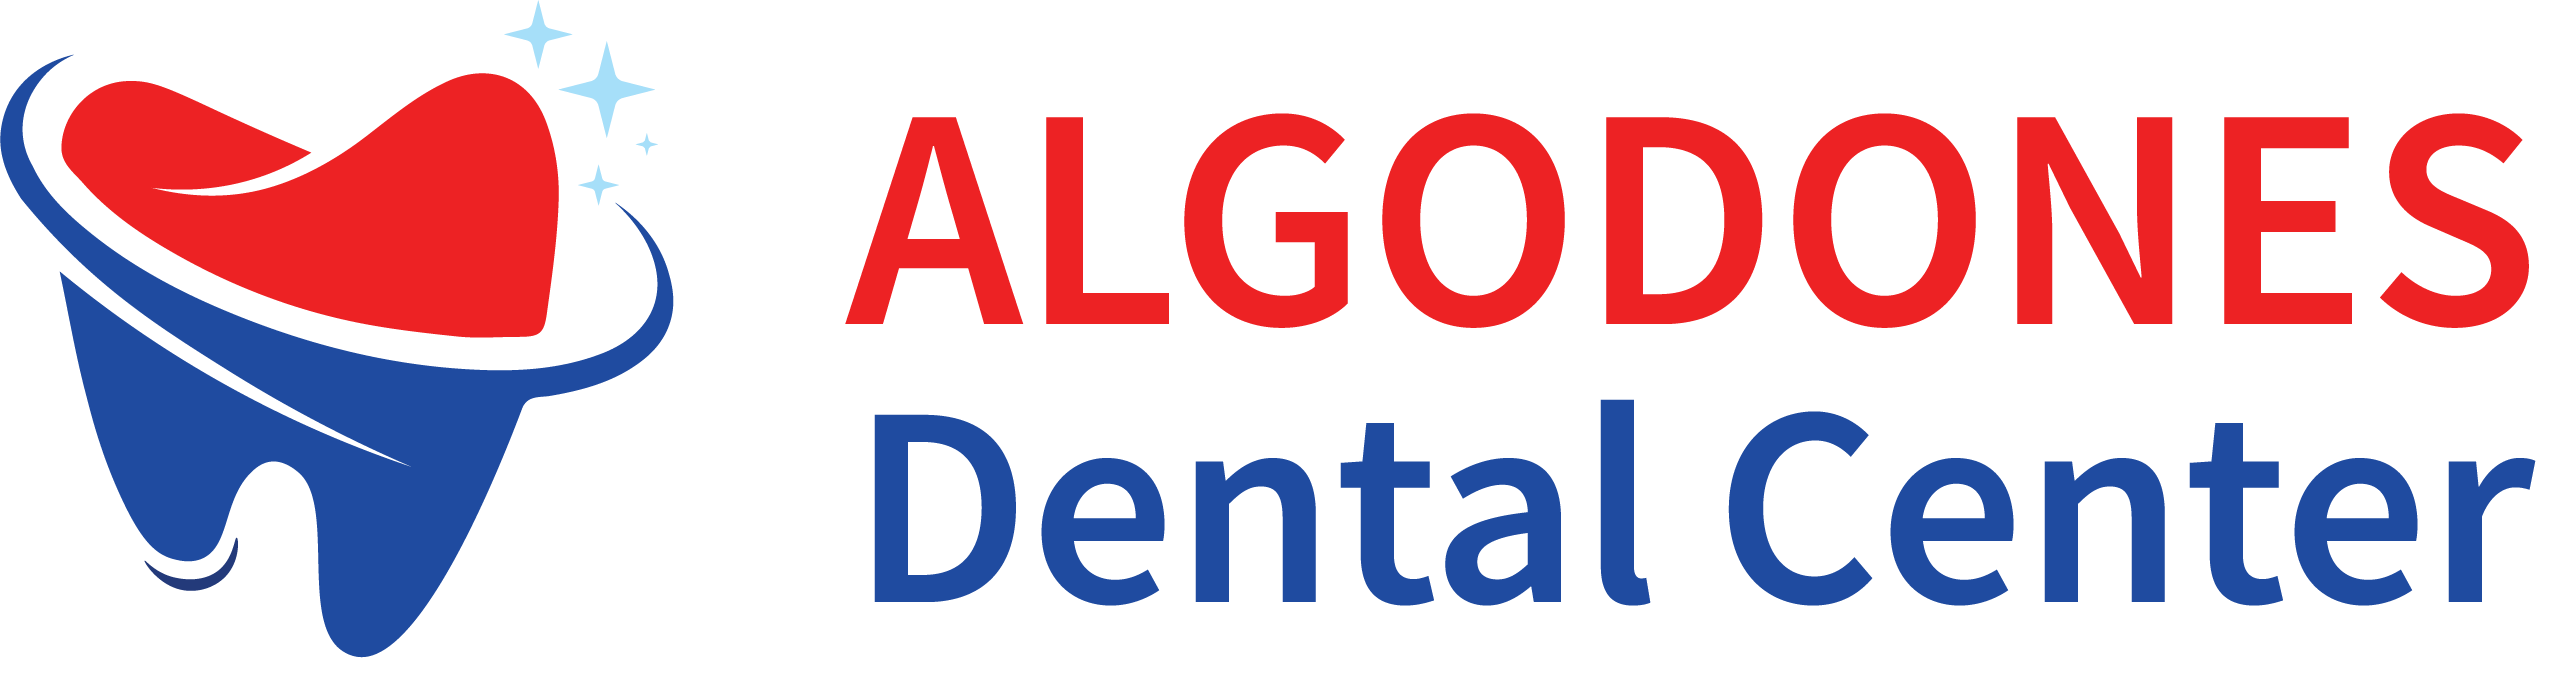 Algodones Dental Center